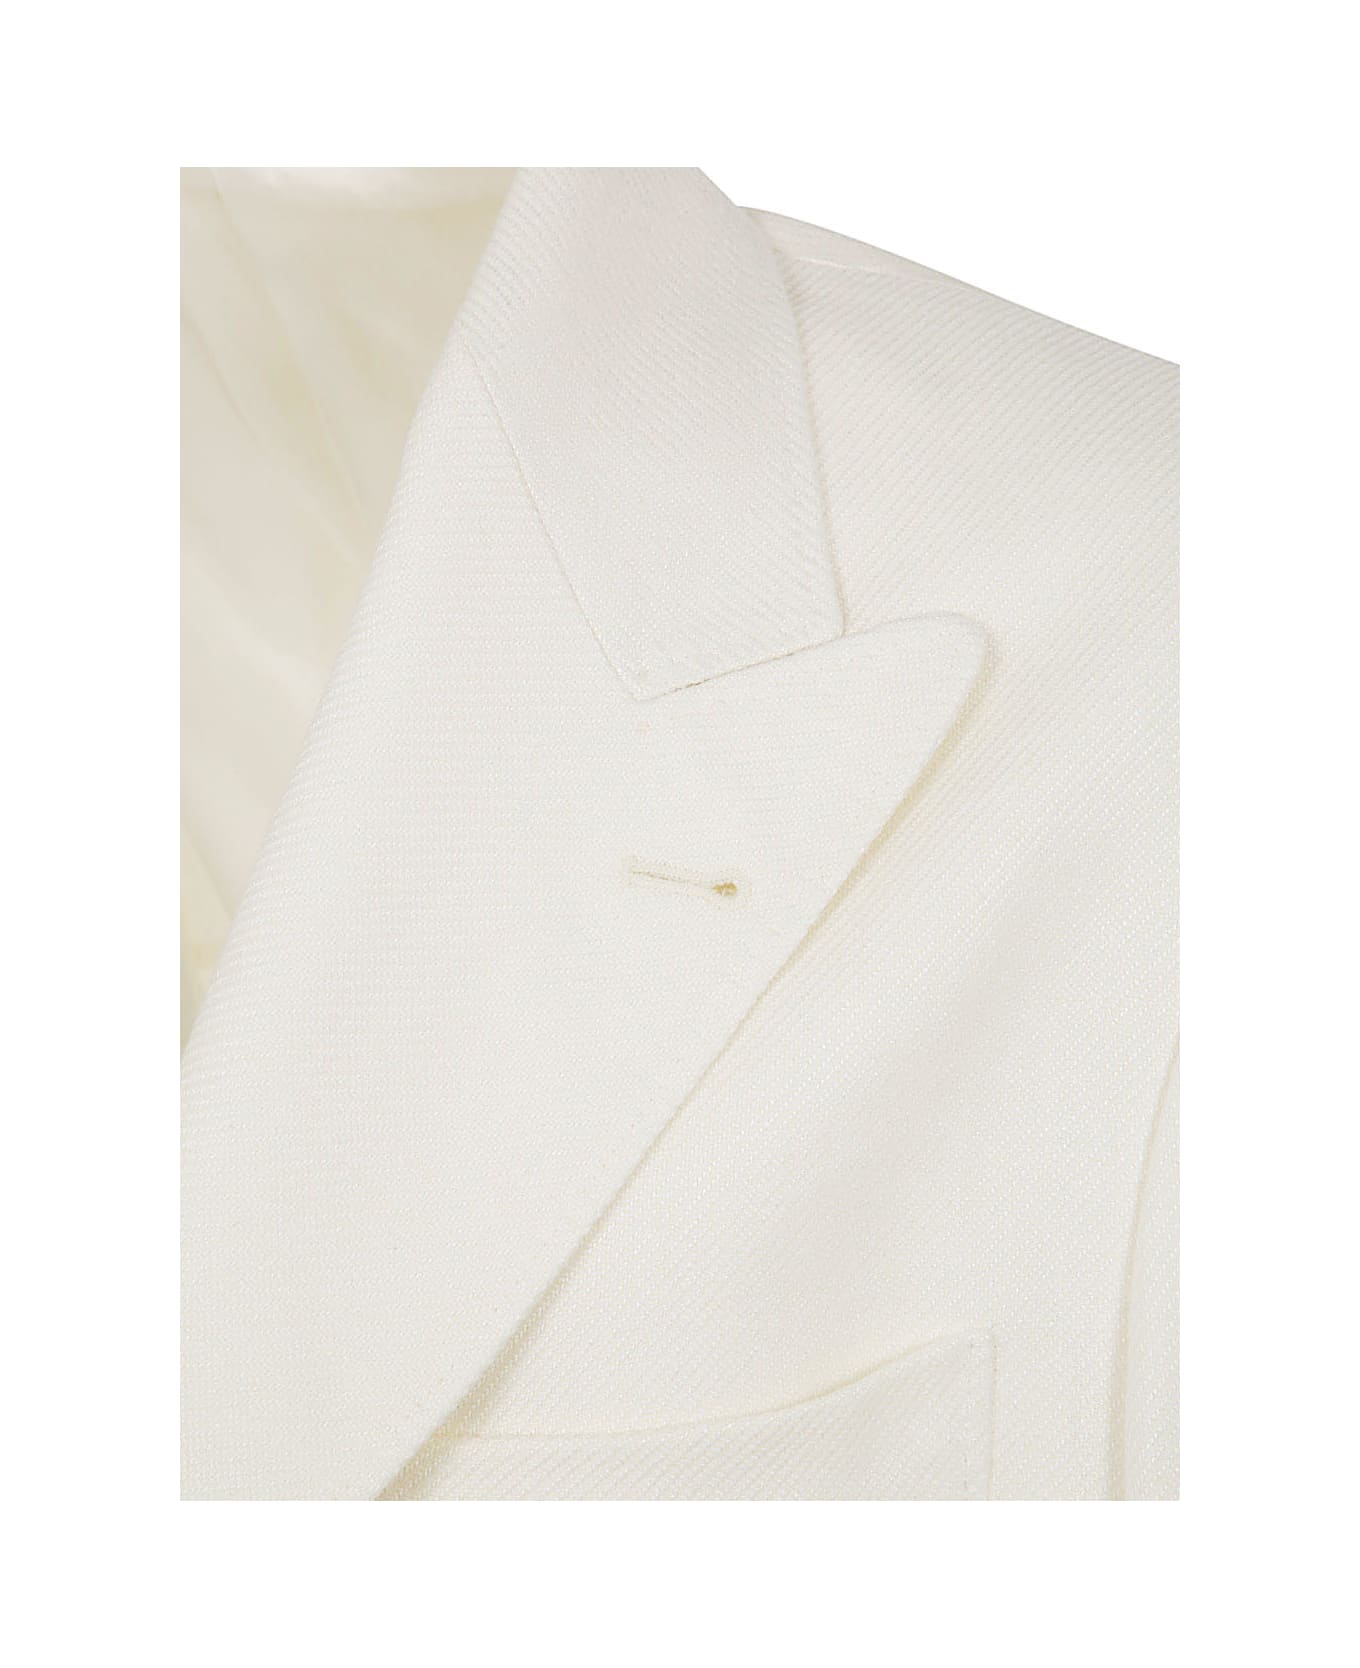 Brunello Cucinelli Suit Type Jacket - Off White